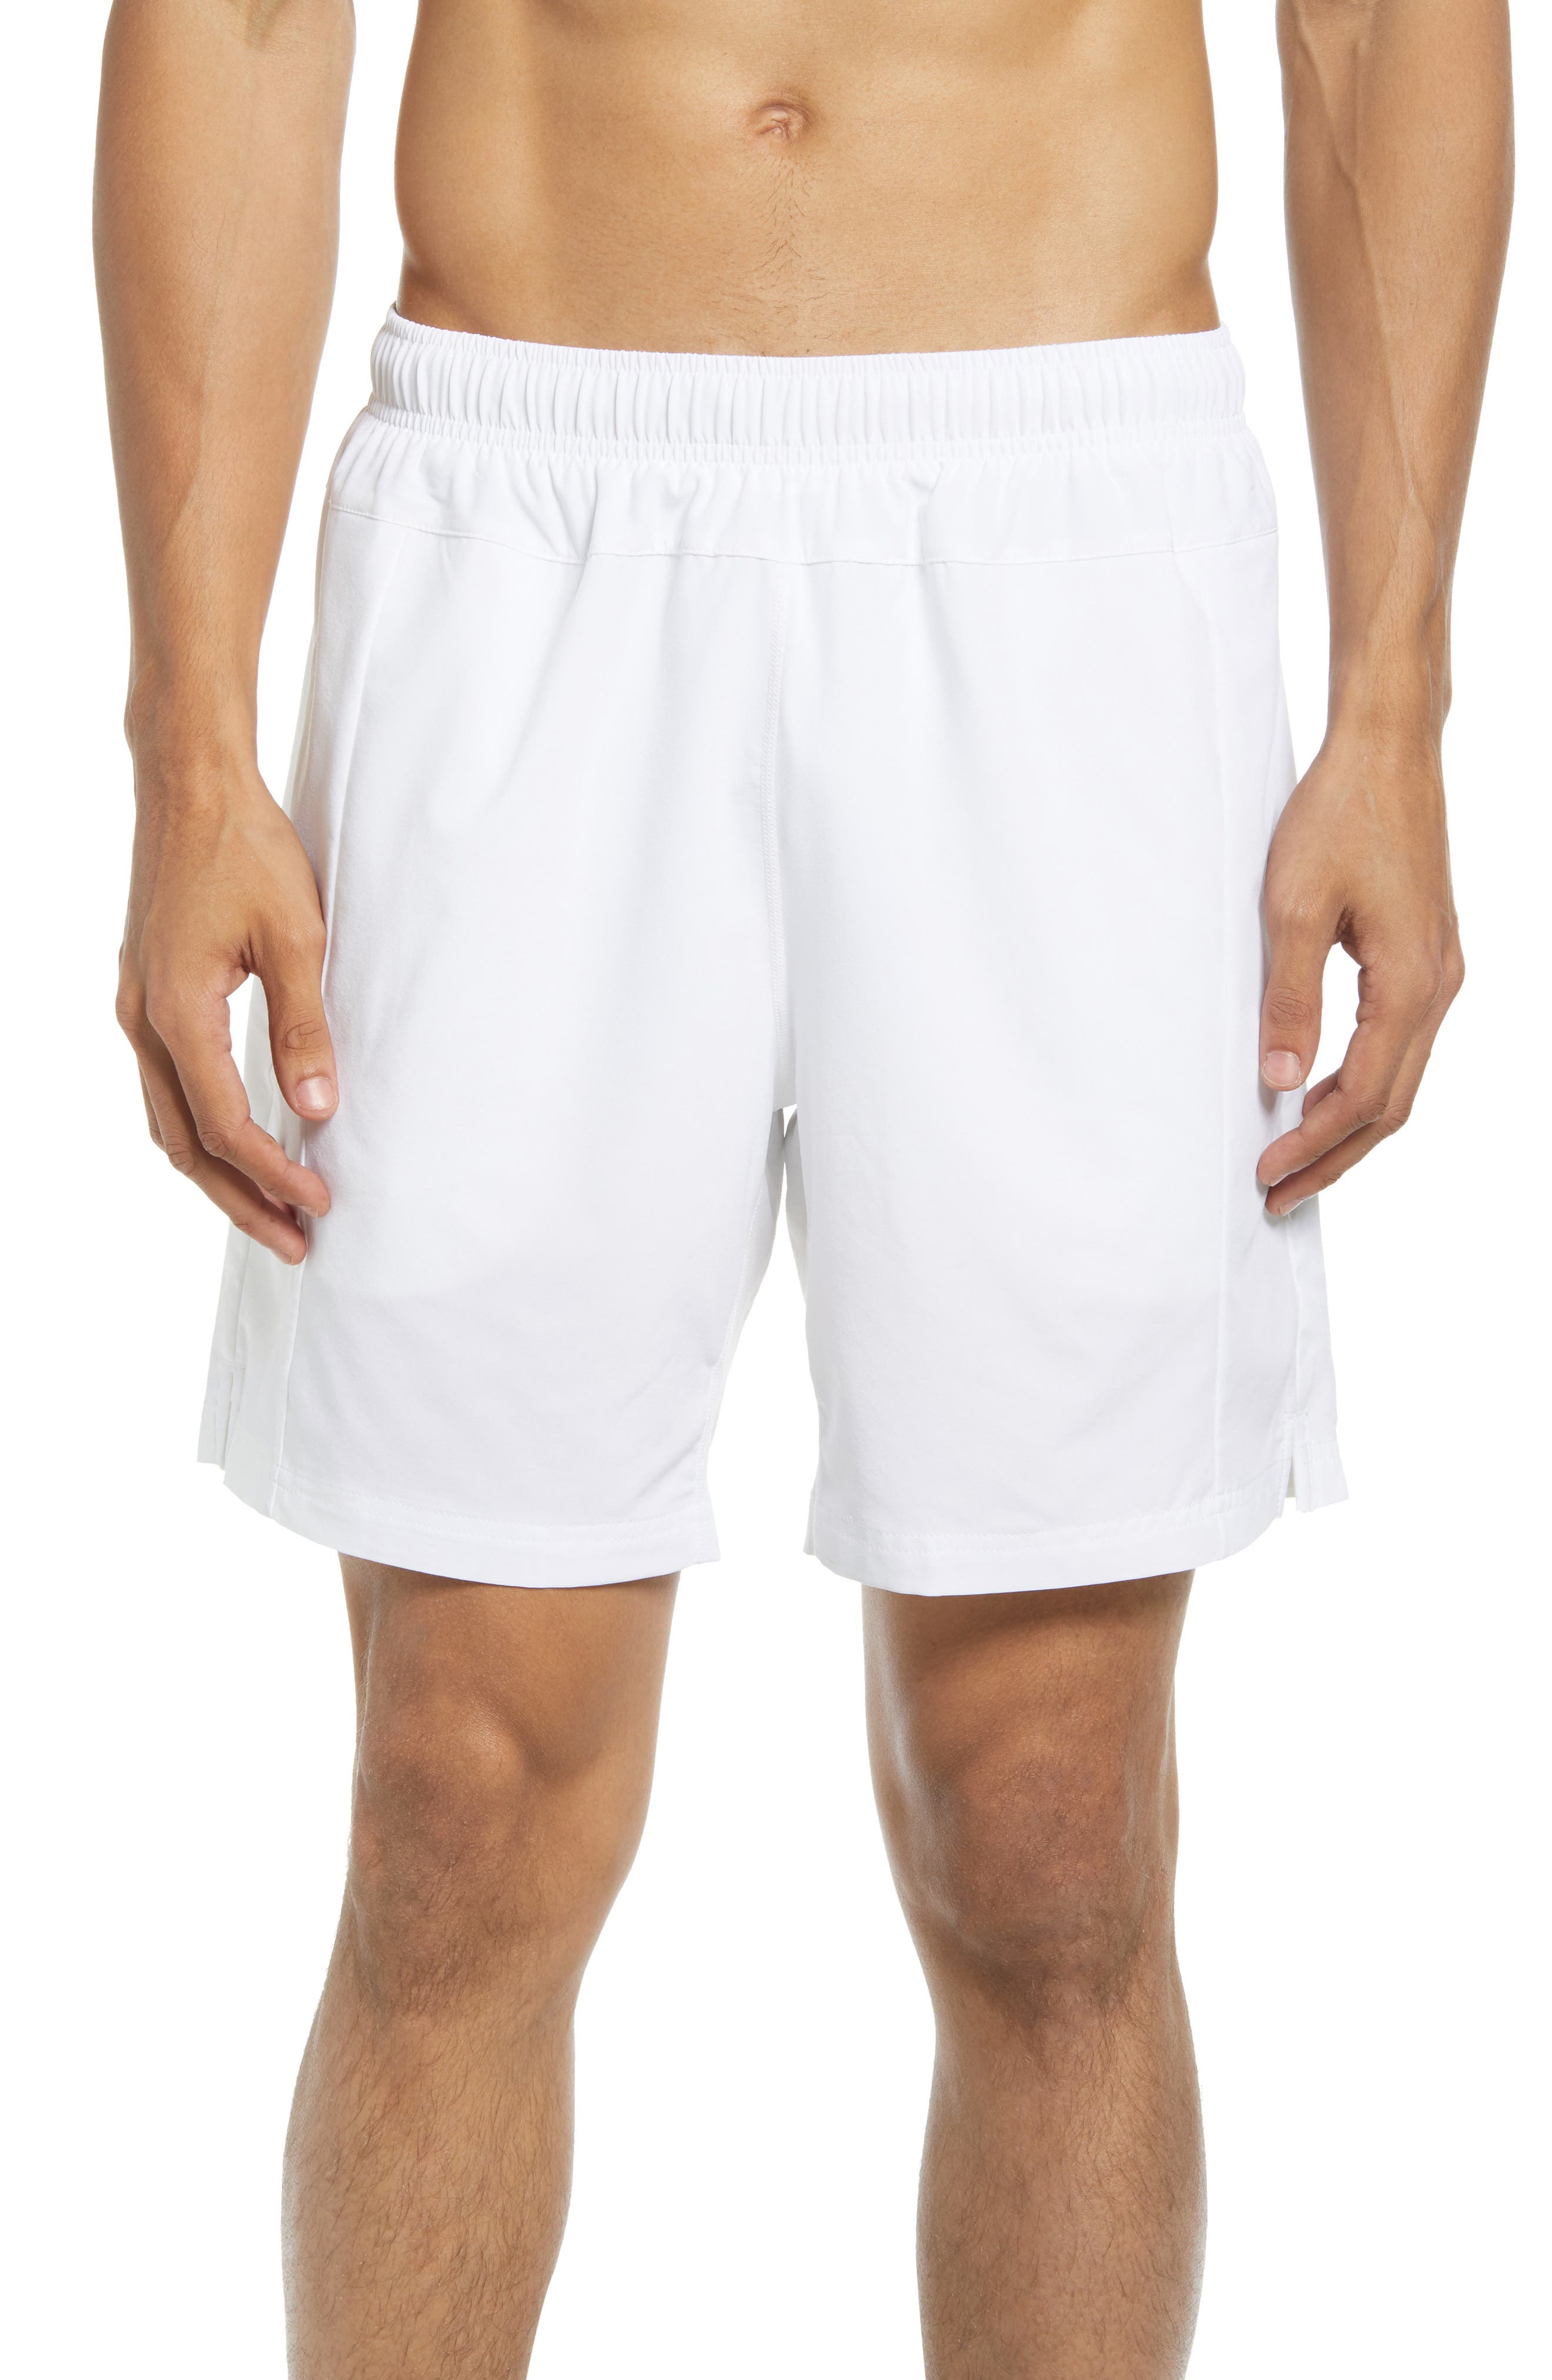 white shorts mens athletic